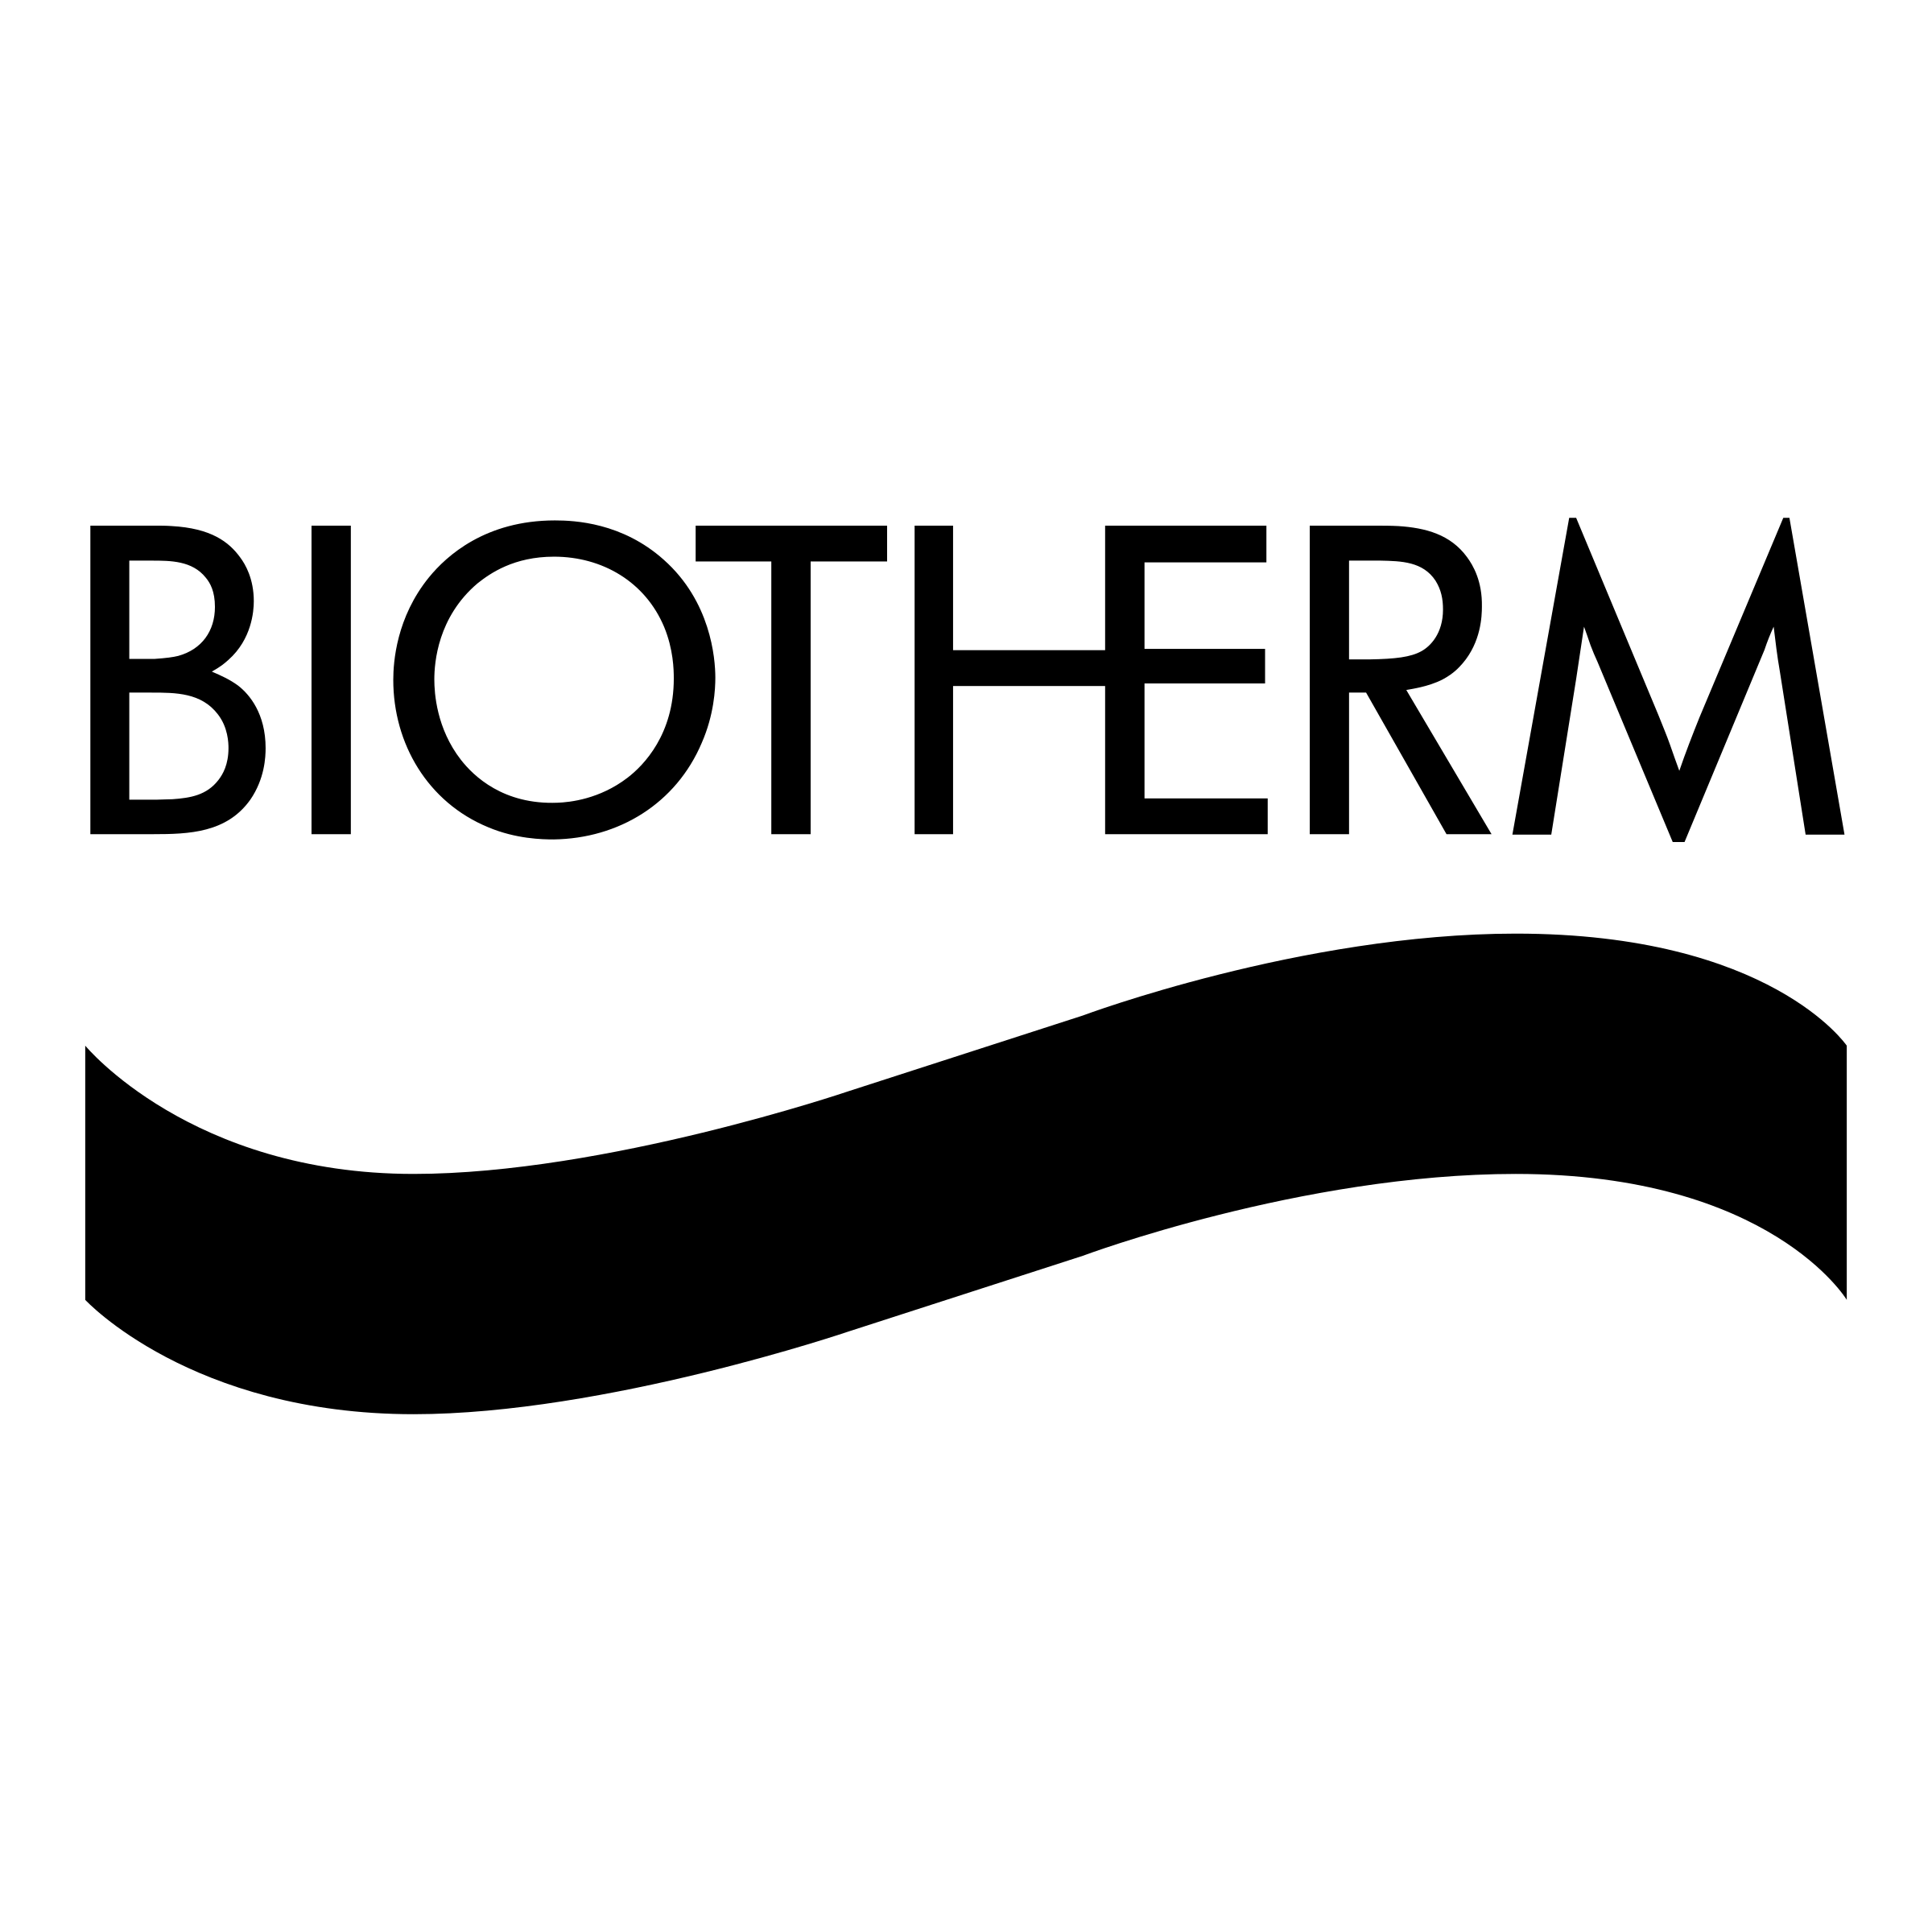 Biotherm Logo - Biotherm Logo PNG Transparent & SVG Vector - Freebie Supply